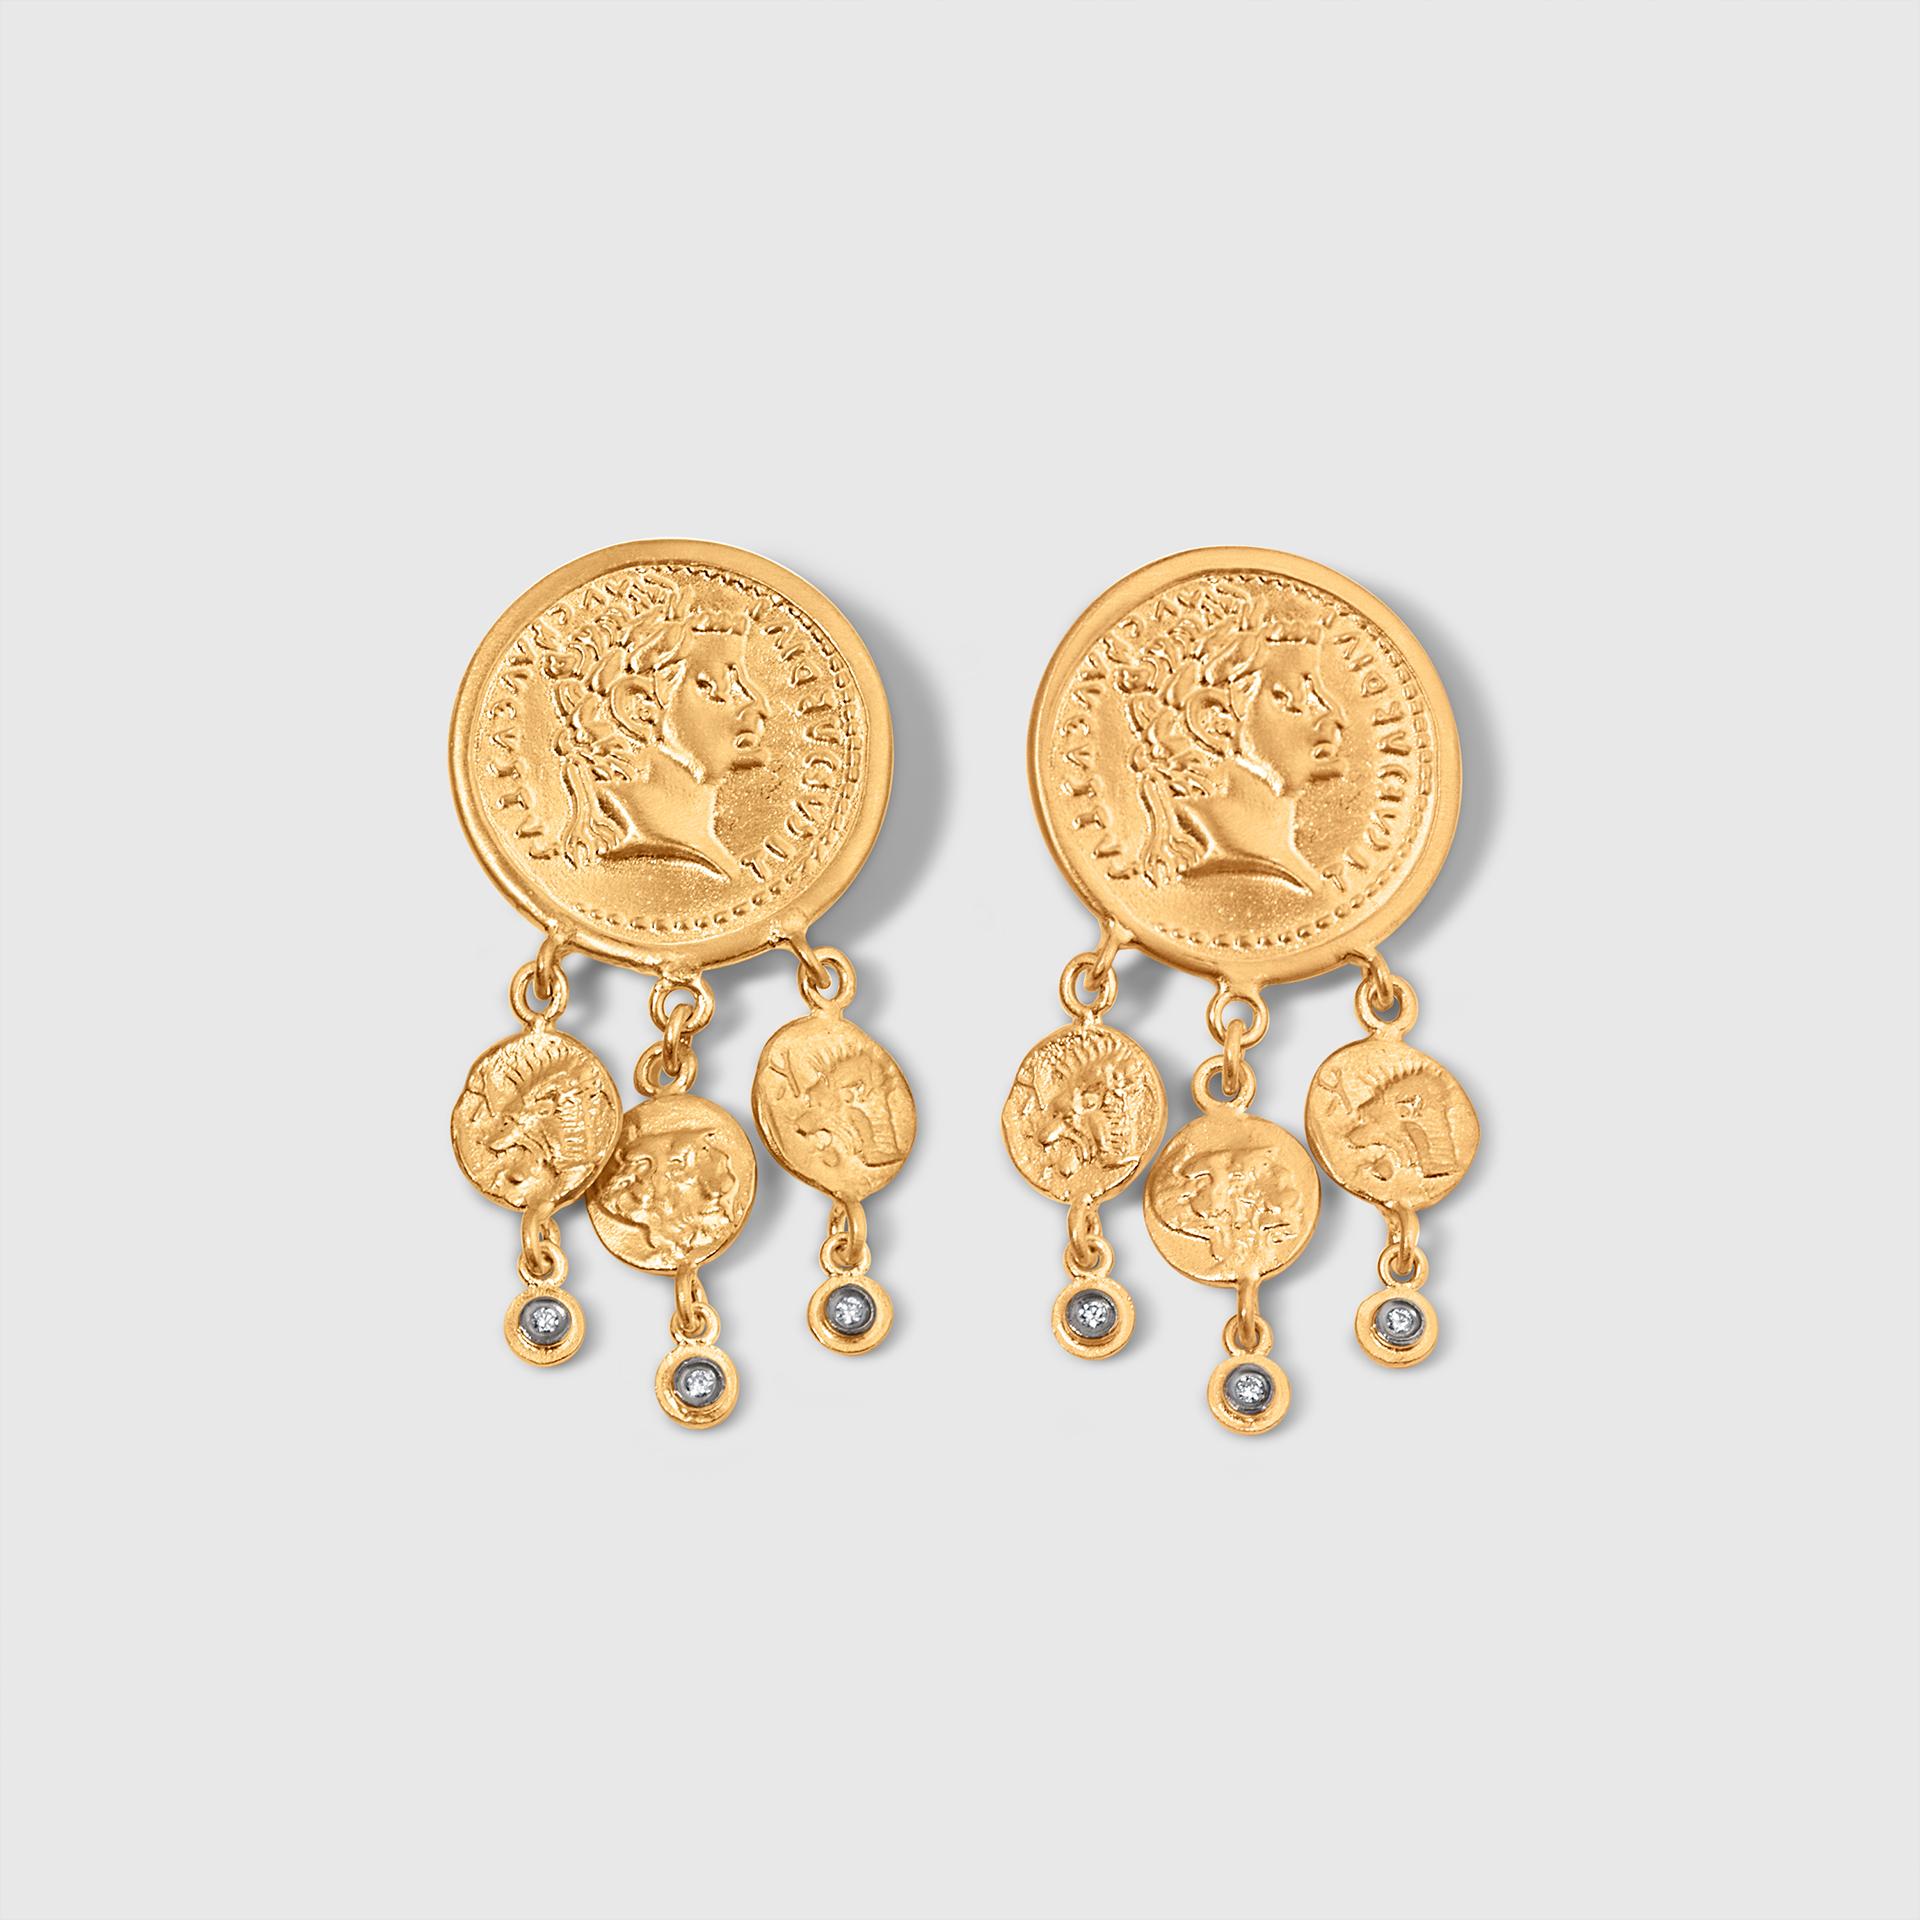 Diamond 24K Gold-fused on Sterling Silver Chandelier Byzantine Coin Earrings by Kurtulan Jewellery of Istanbul, Turkey, approx 2